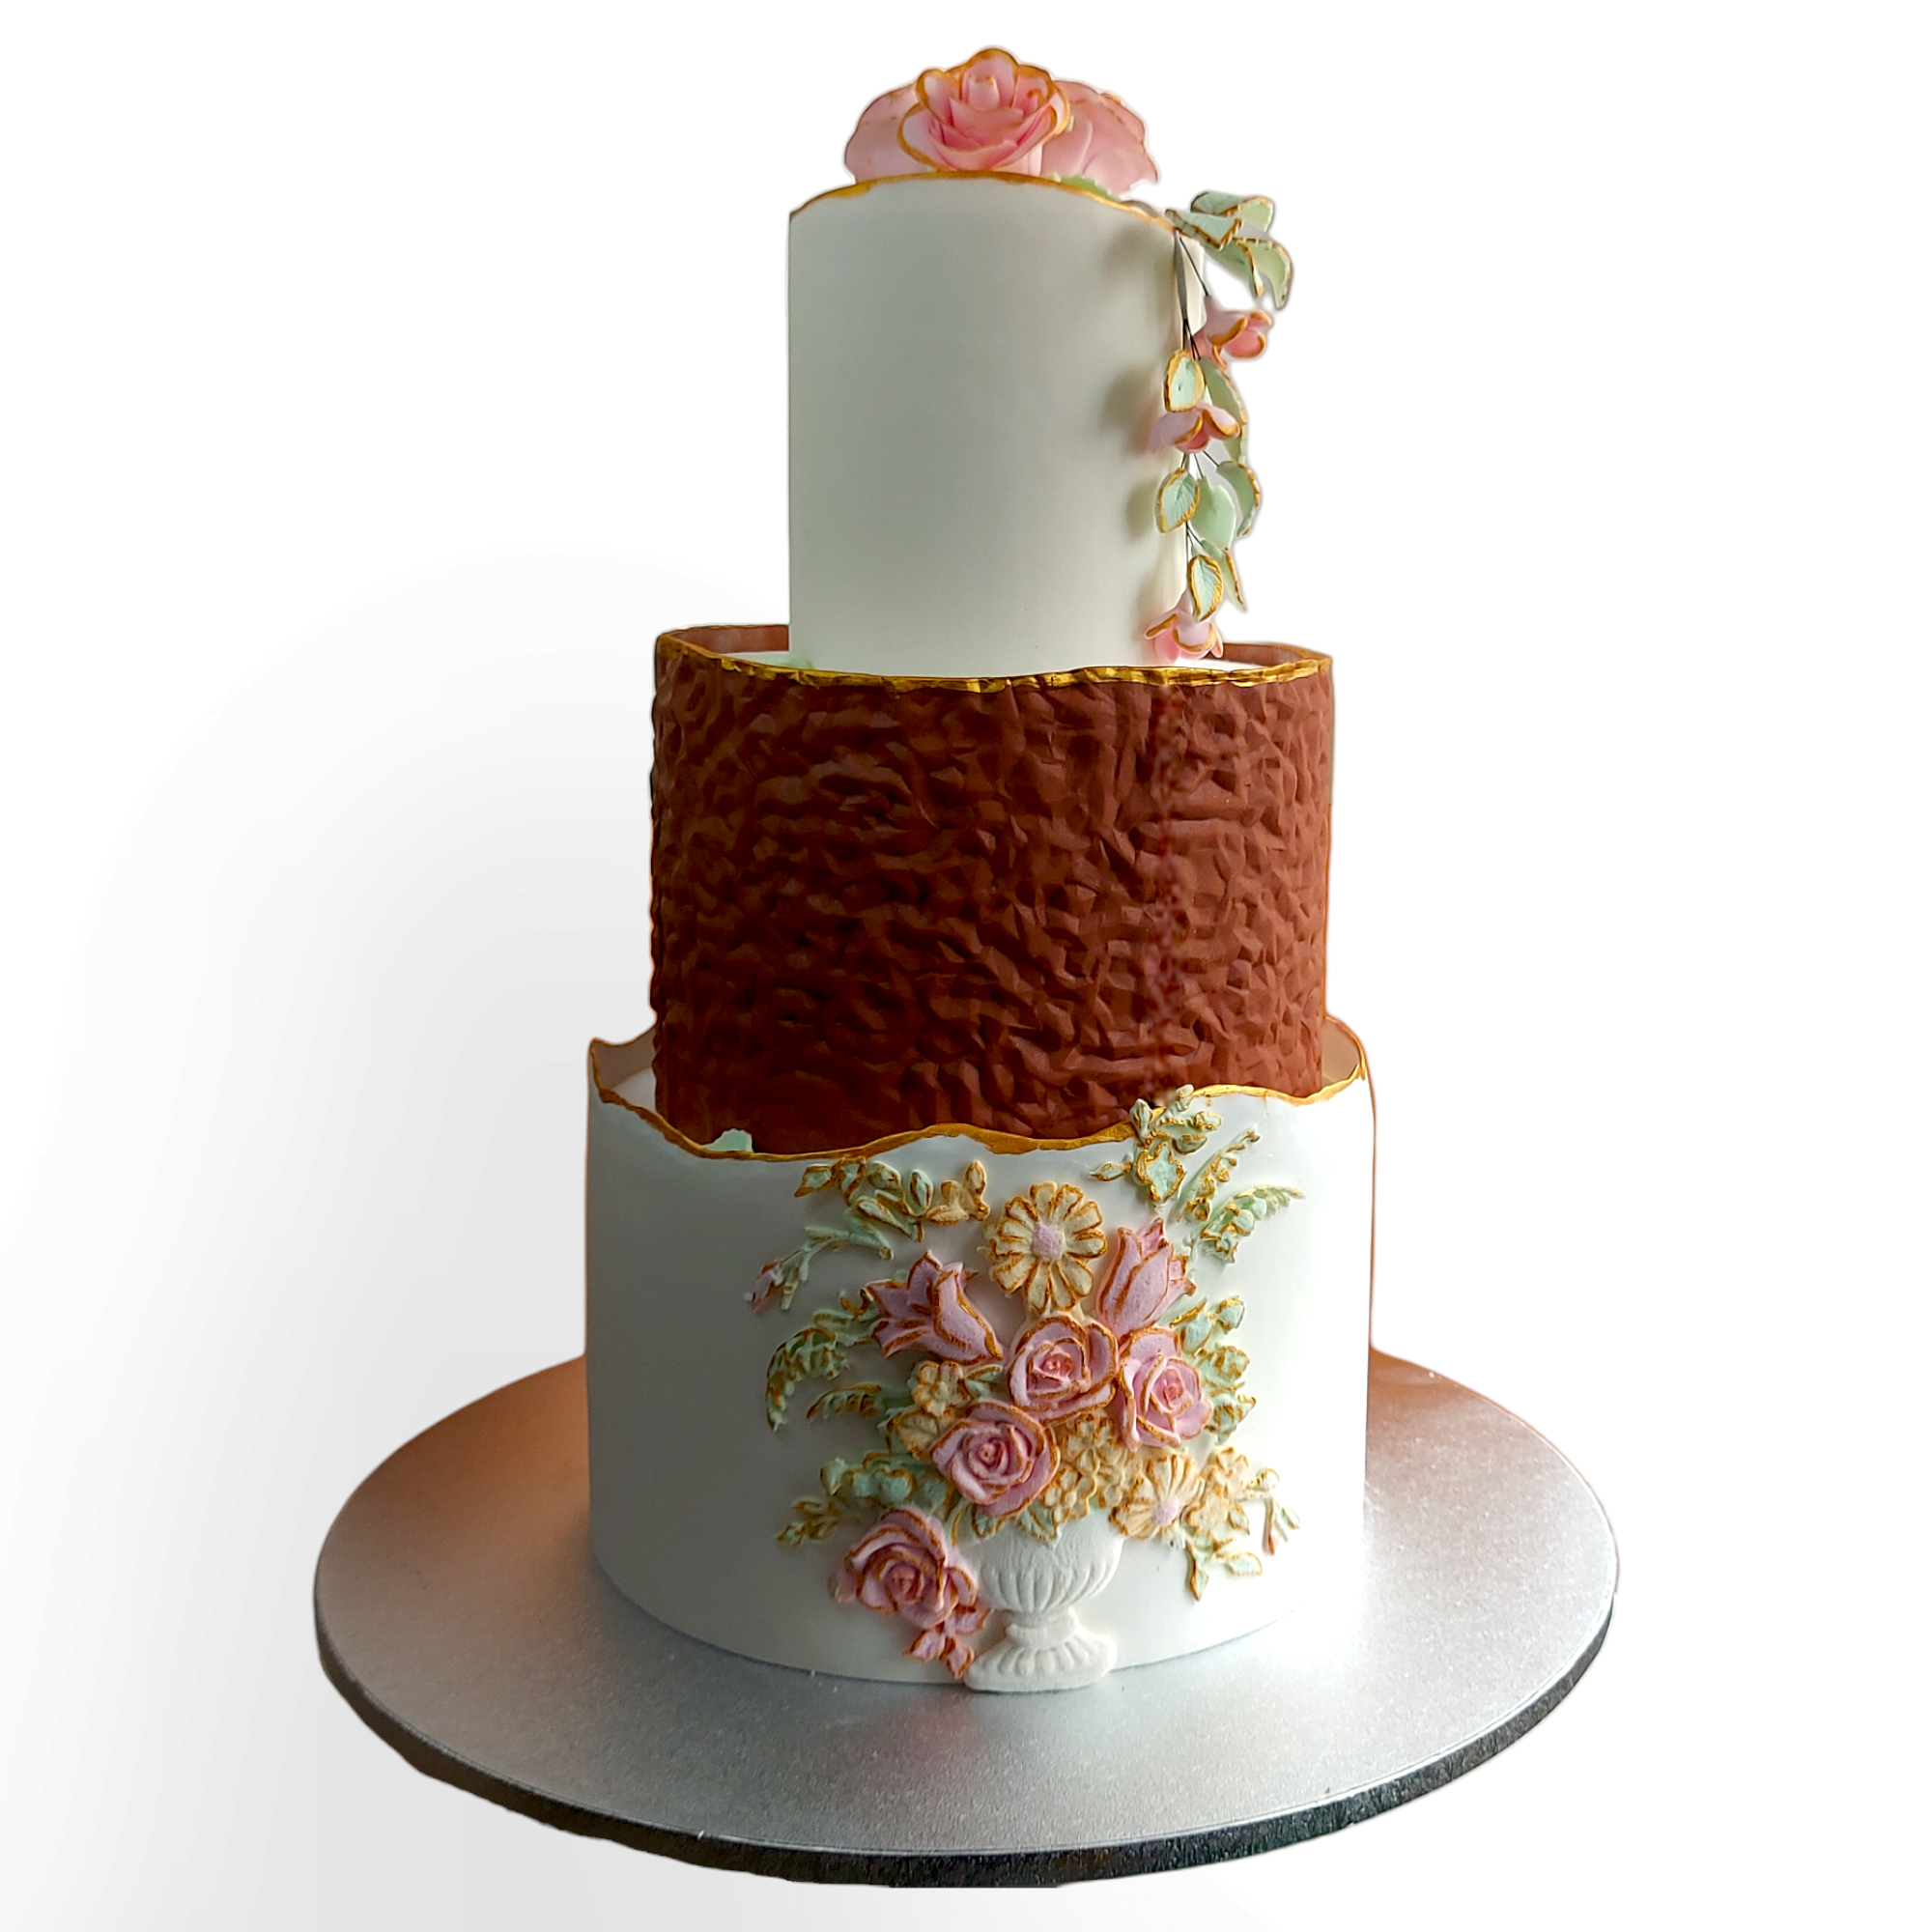 Buttercream Iced Birthday Cake With Sugar Flowers